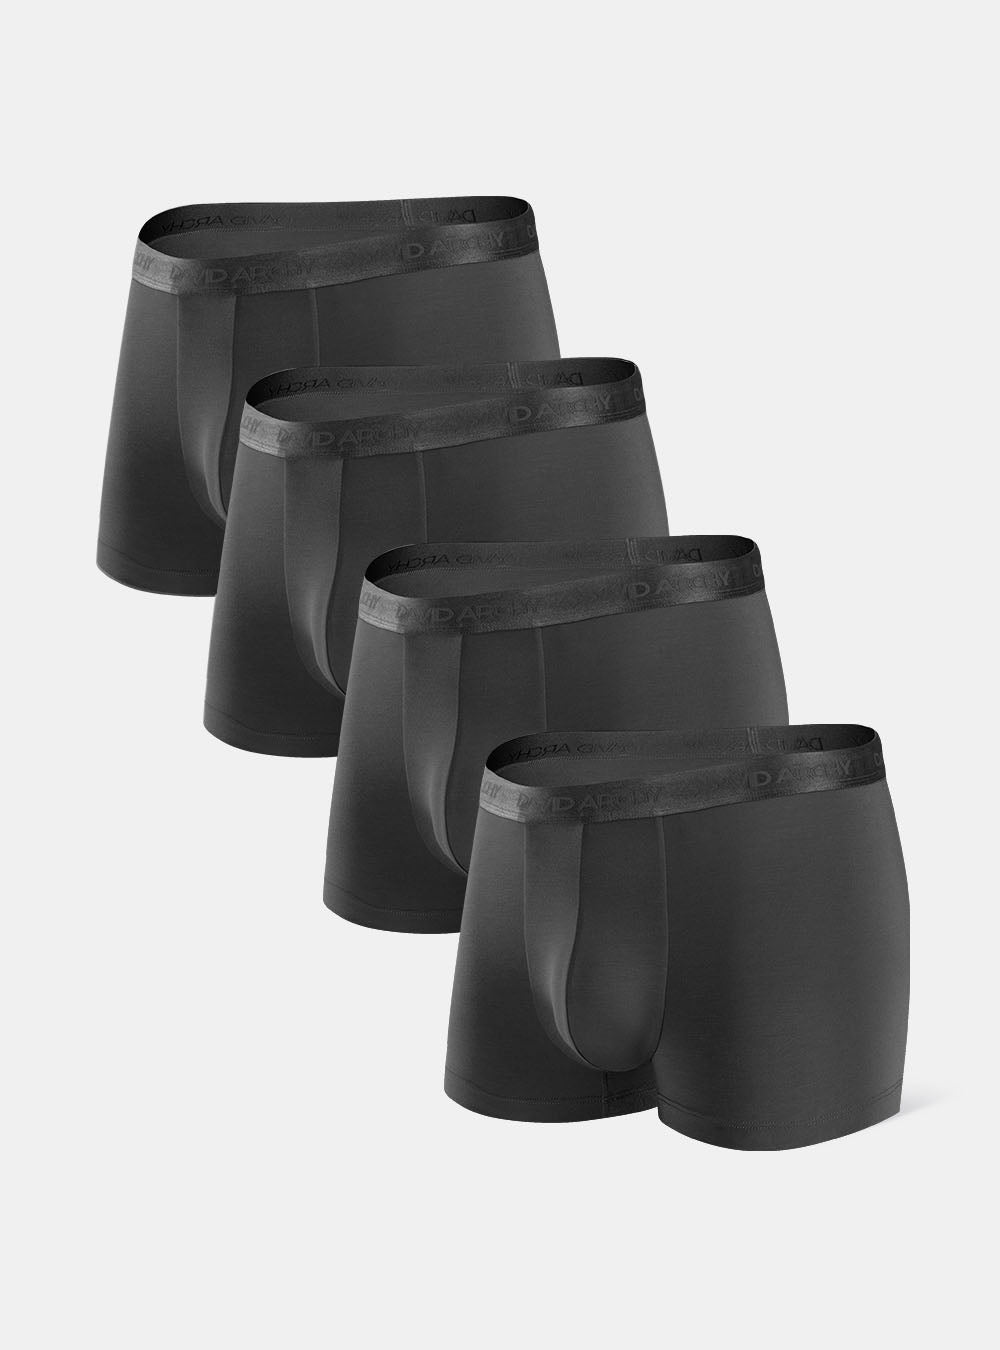 Micro Modal Tall Men's Underwear in Black